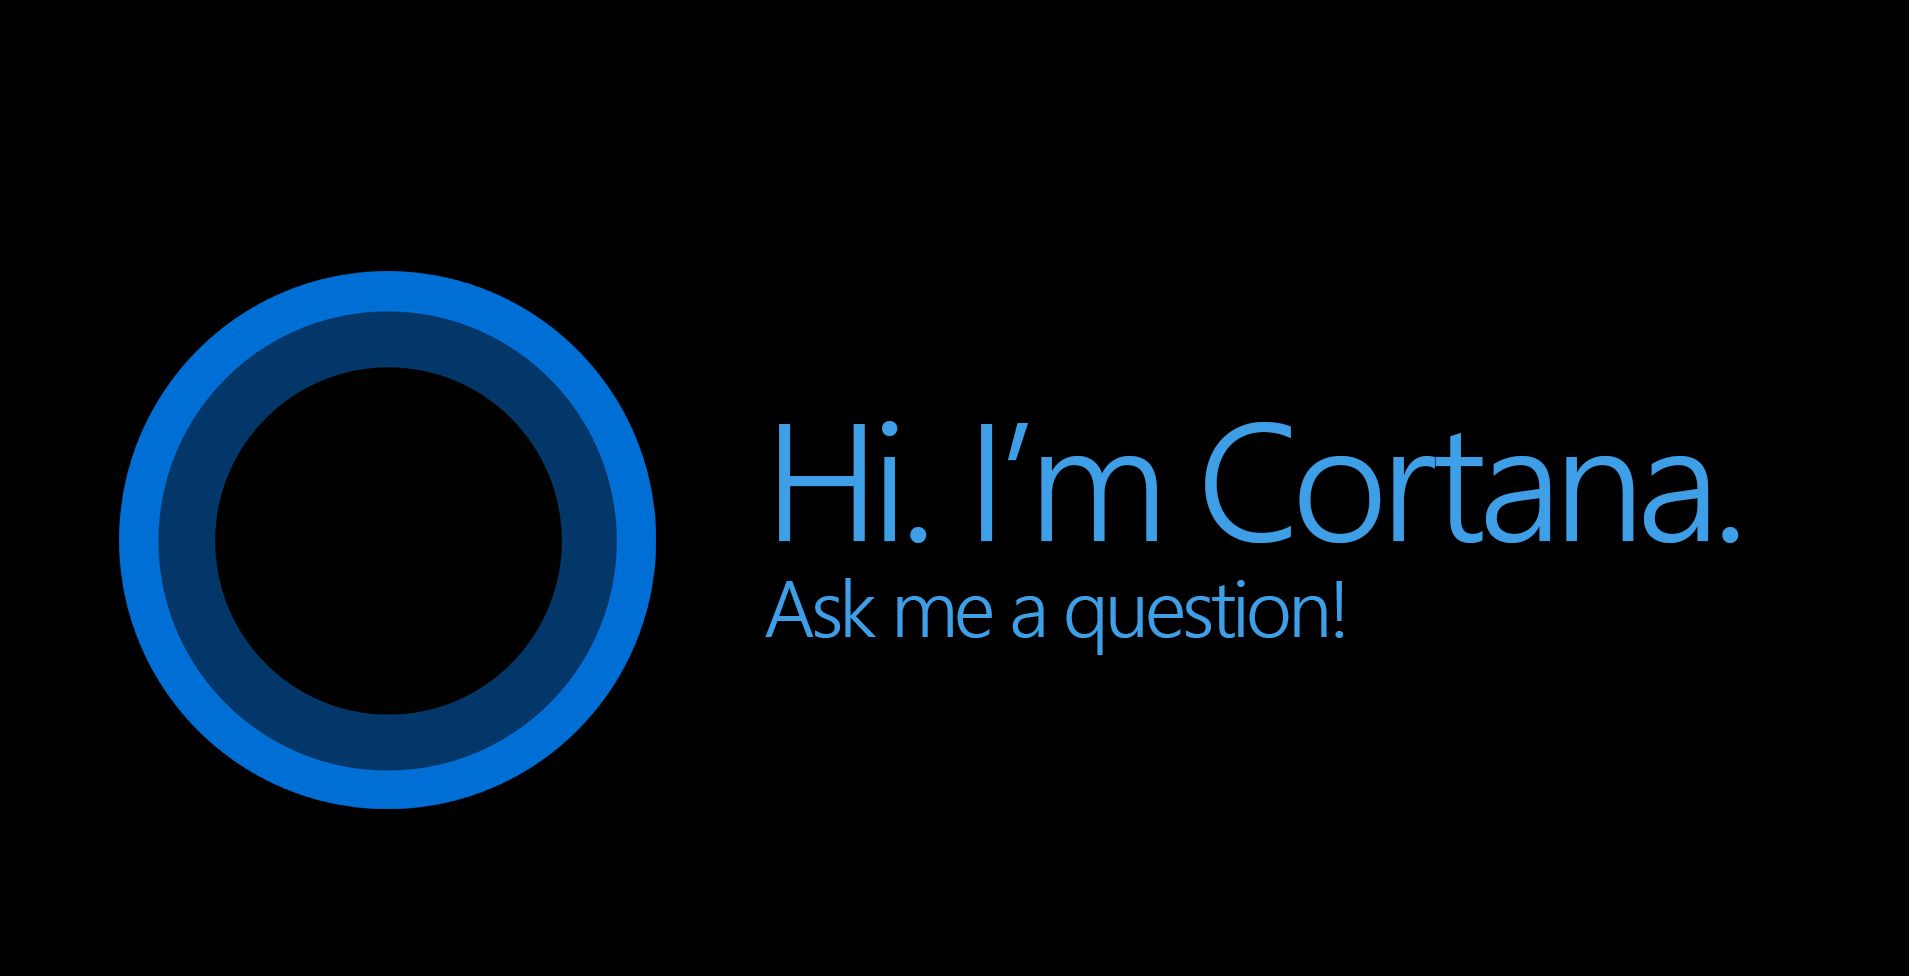 Microsoft to bring Cortana to Android and iOS platform soon